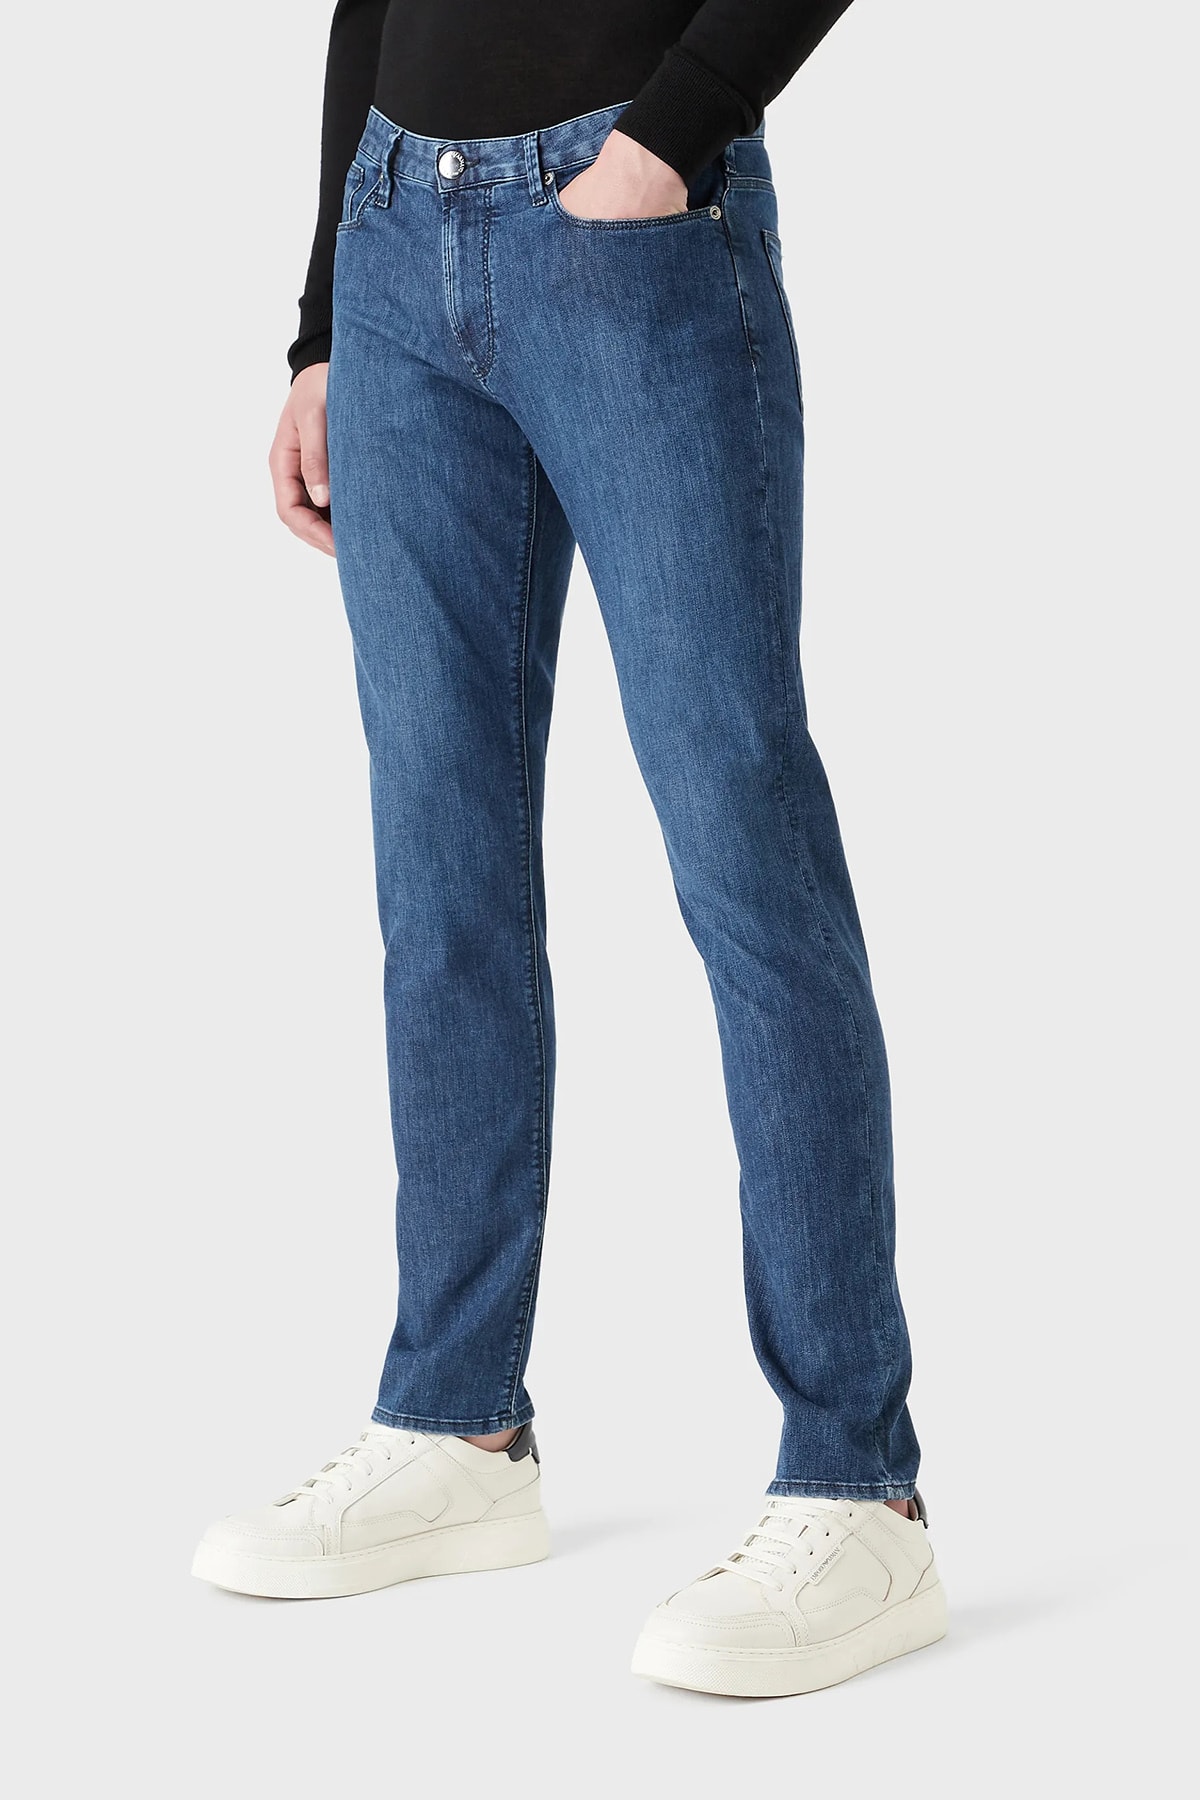 Emporio Armani J06 Pamuklu Düşük Bel Regular Fit Düz Paça Jeans Erkek Kot Pantolon 8n1j06 1d85z 0943